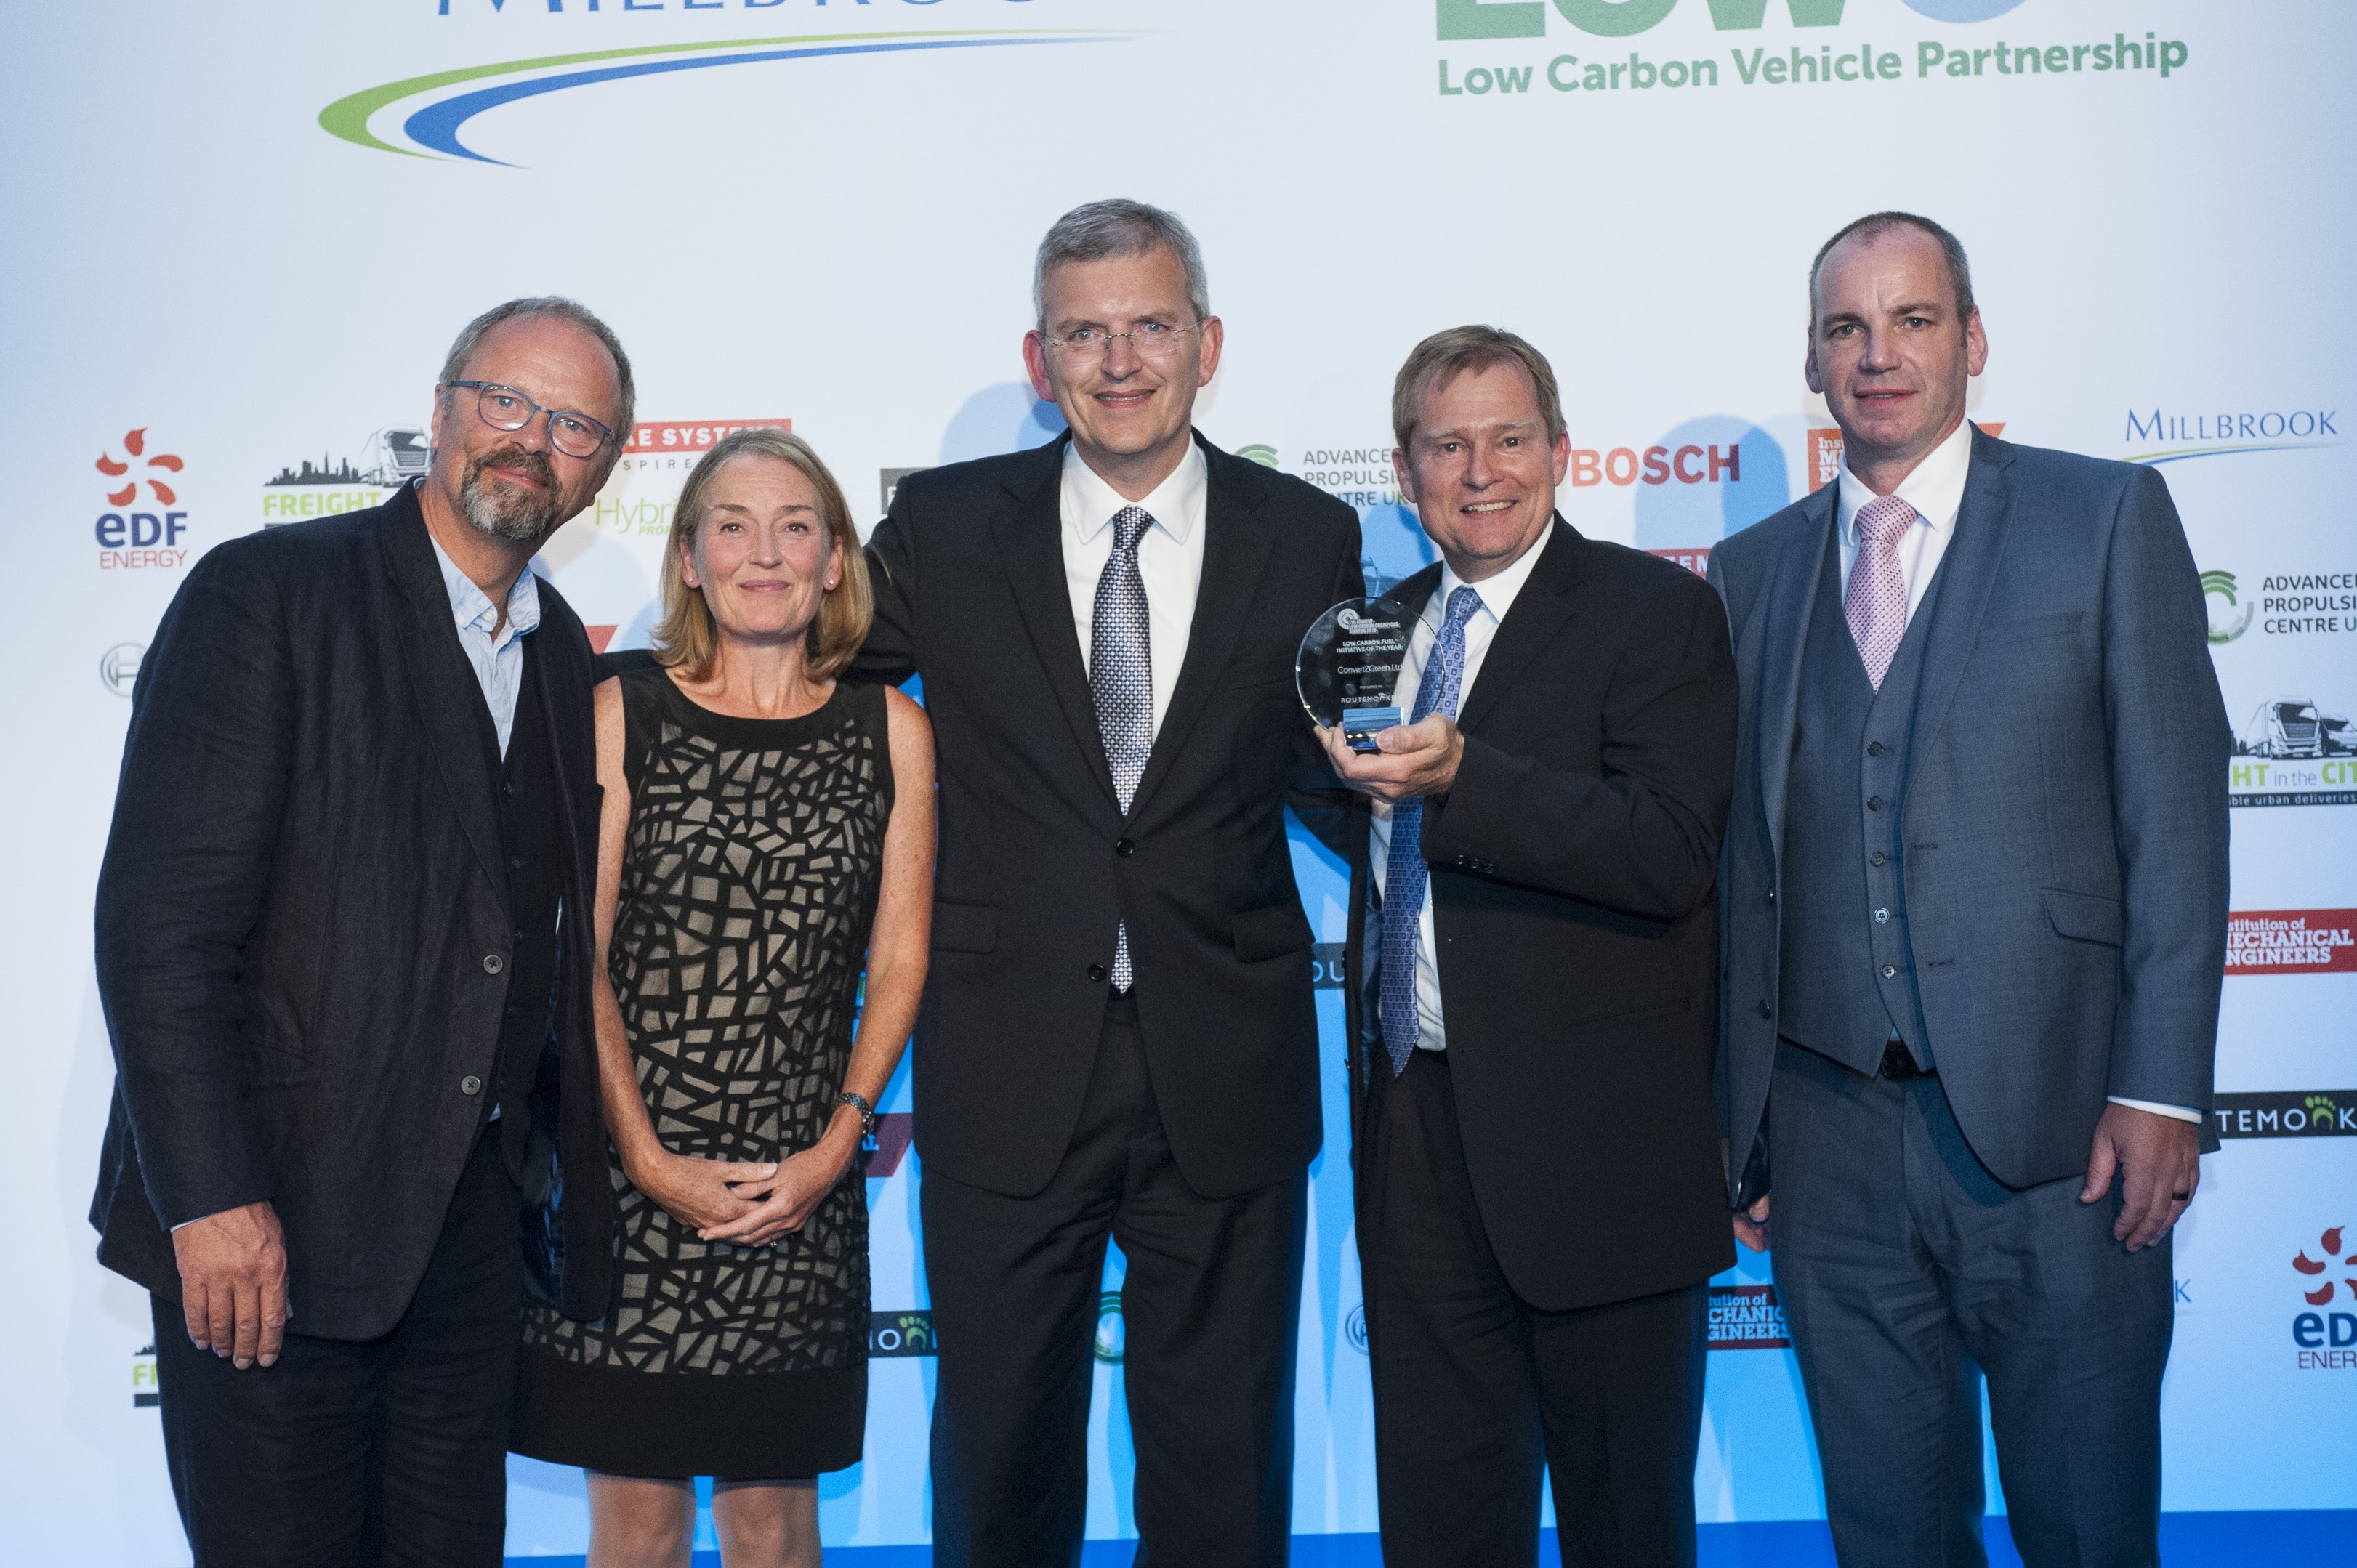 C2G Wins Low Carbon Award